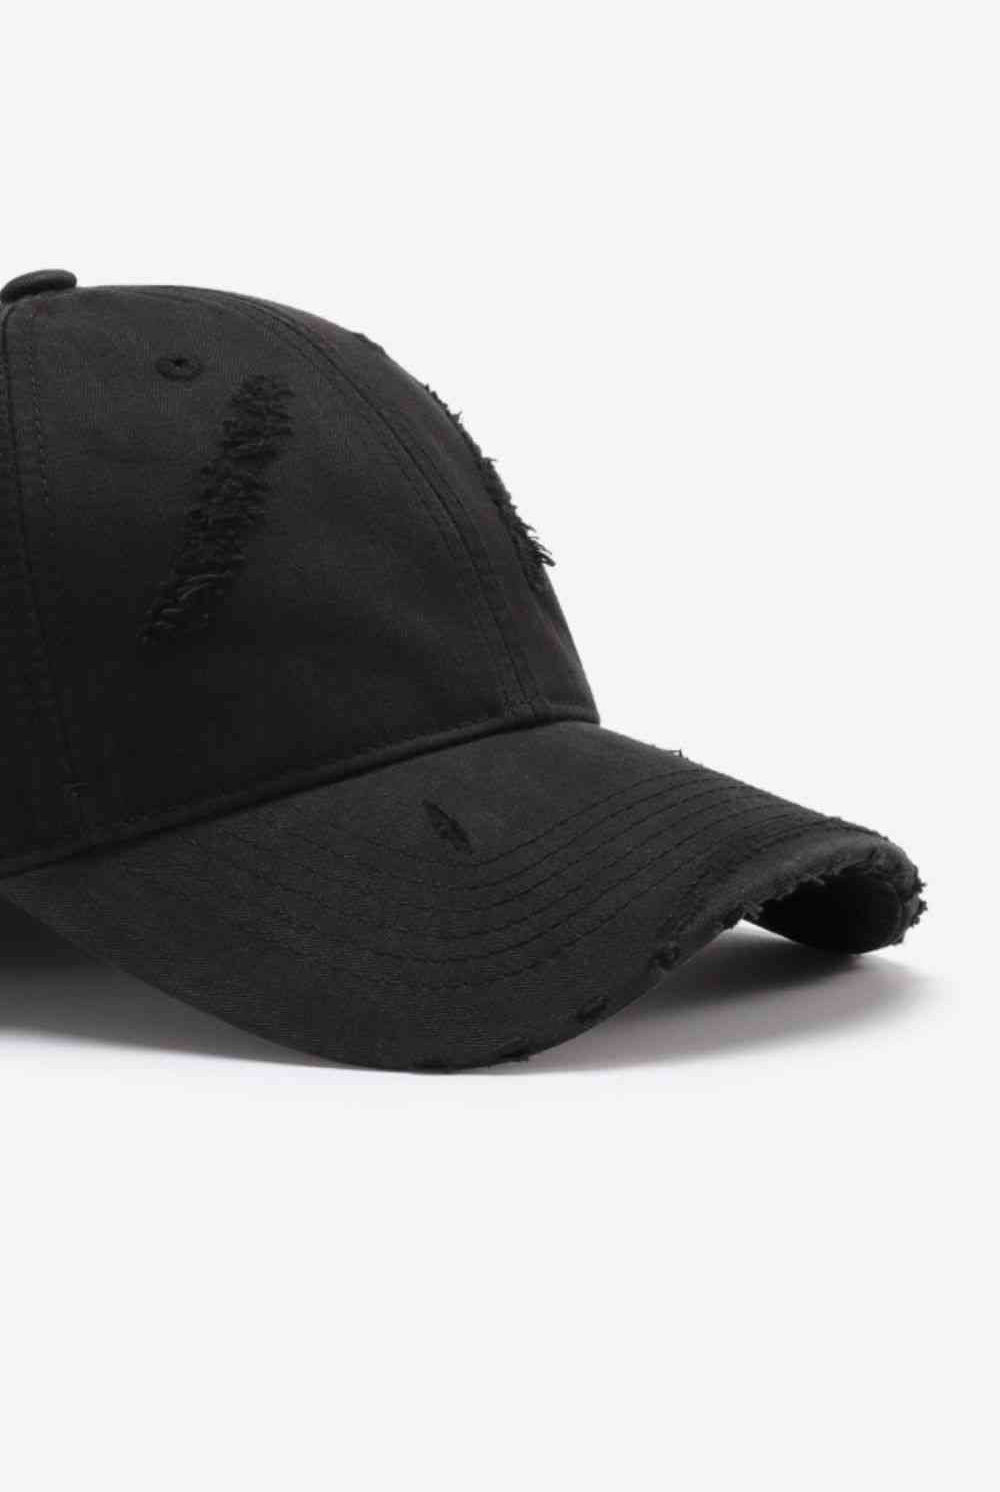 White Smoke Basic Distressed Adjustable Baseball Cap Hats